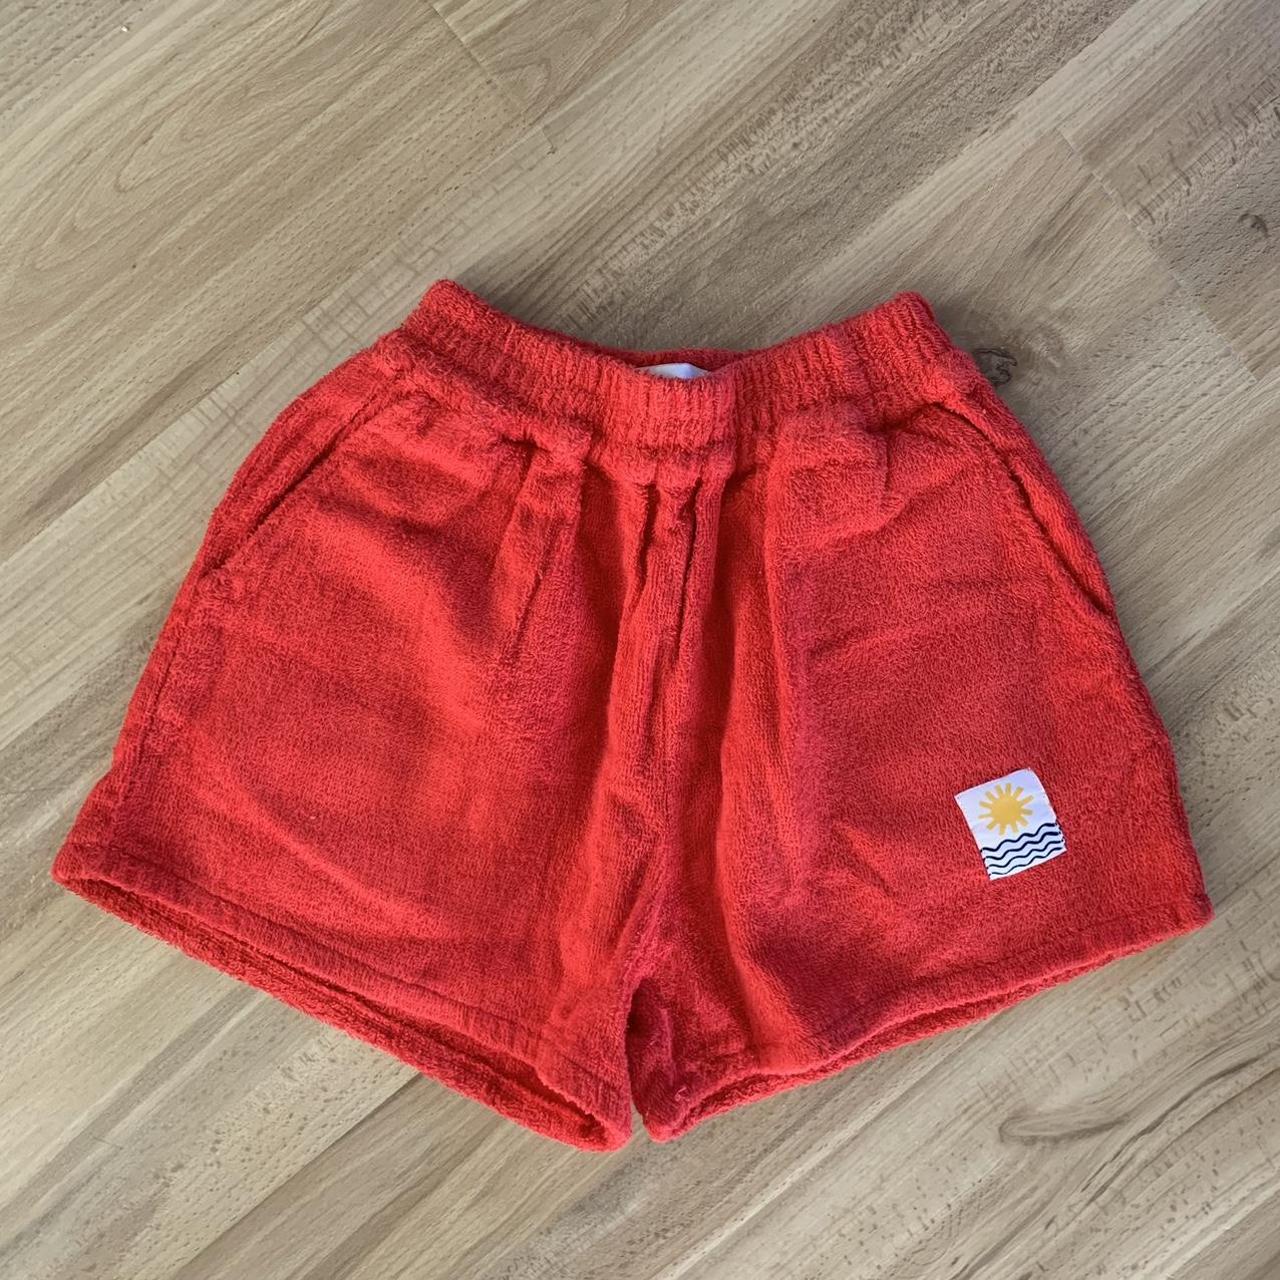 LF Markey  Women's Red Shorts